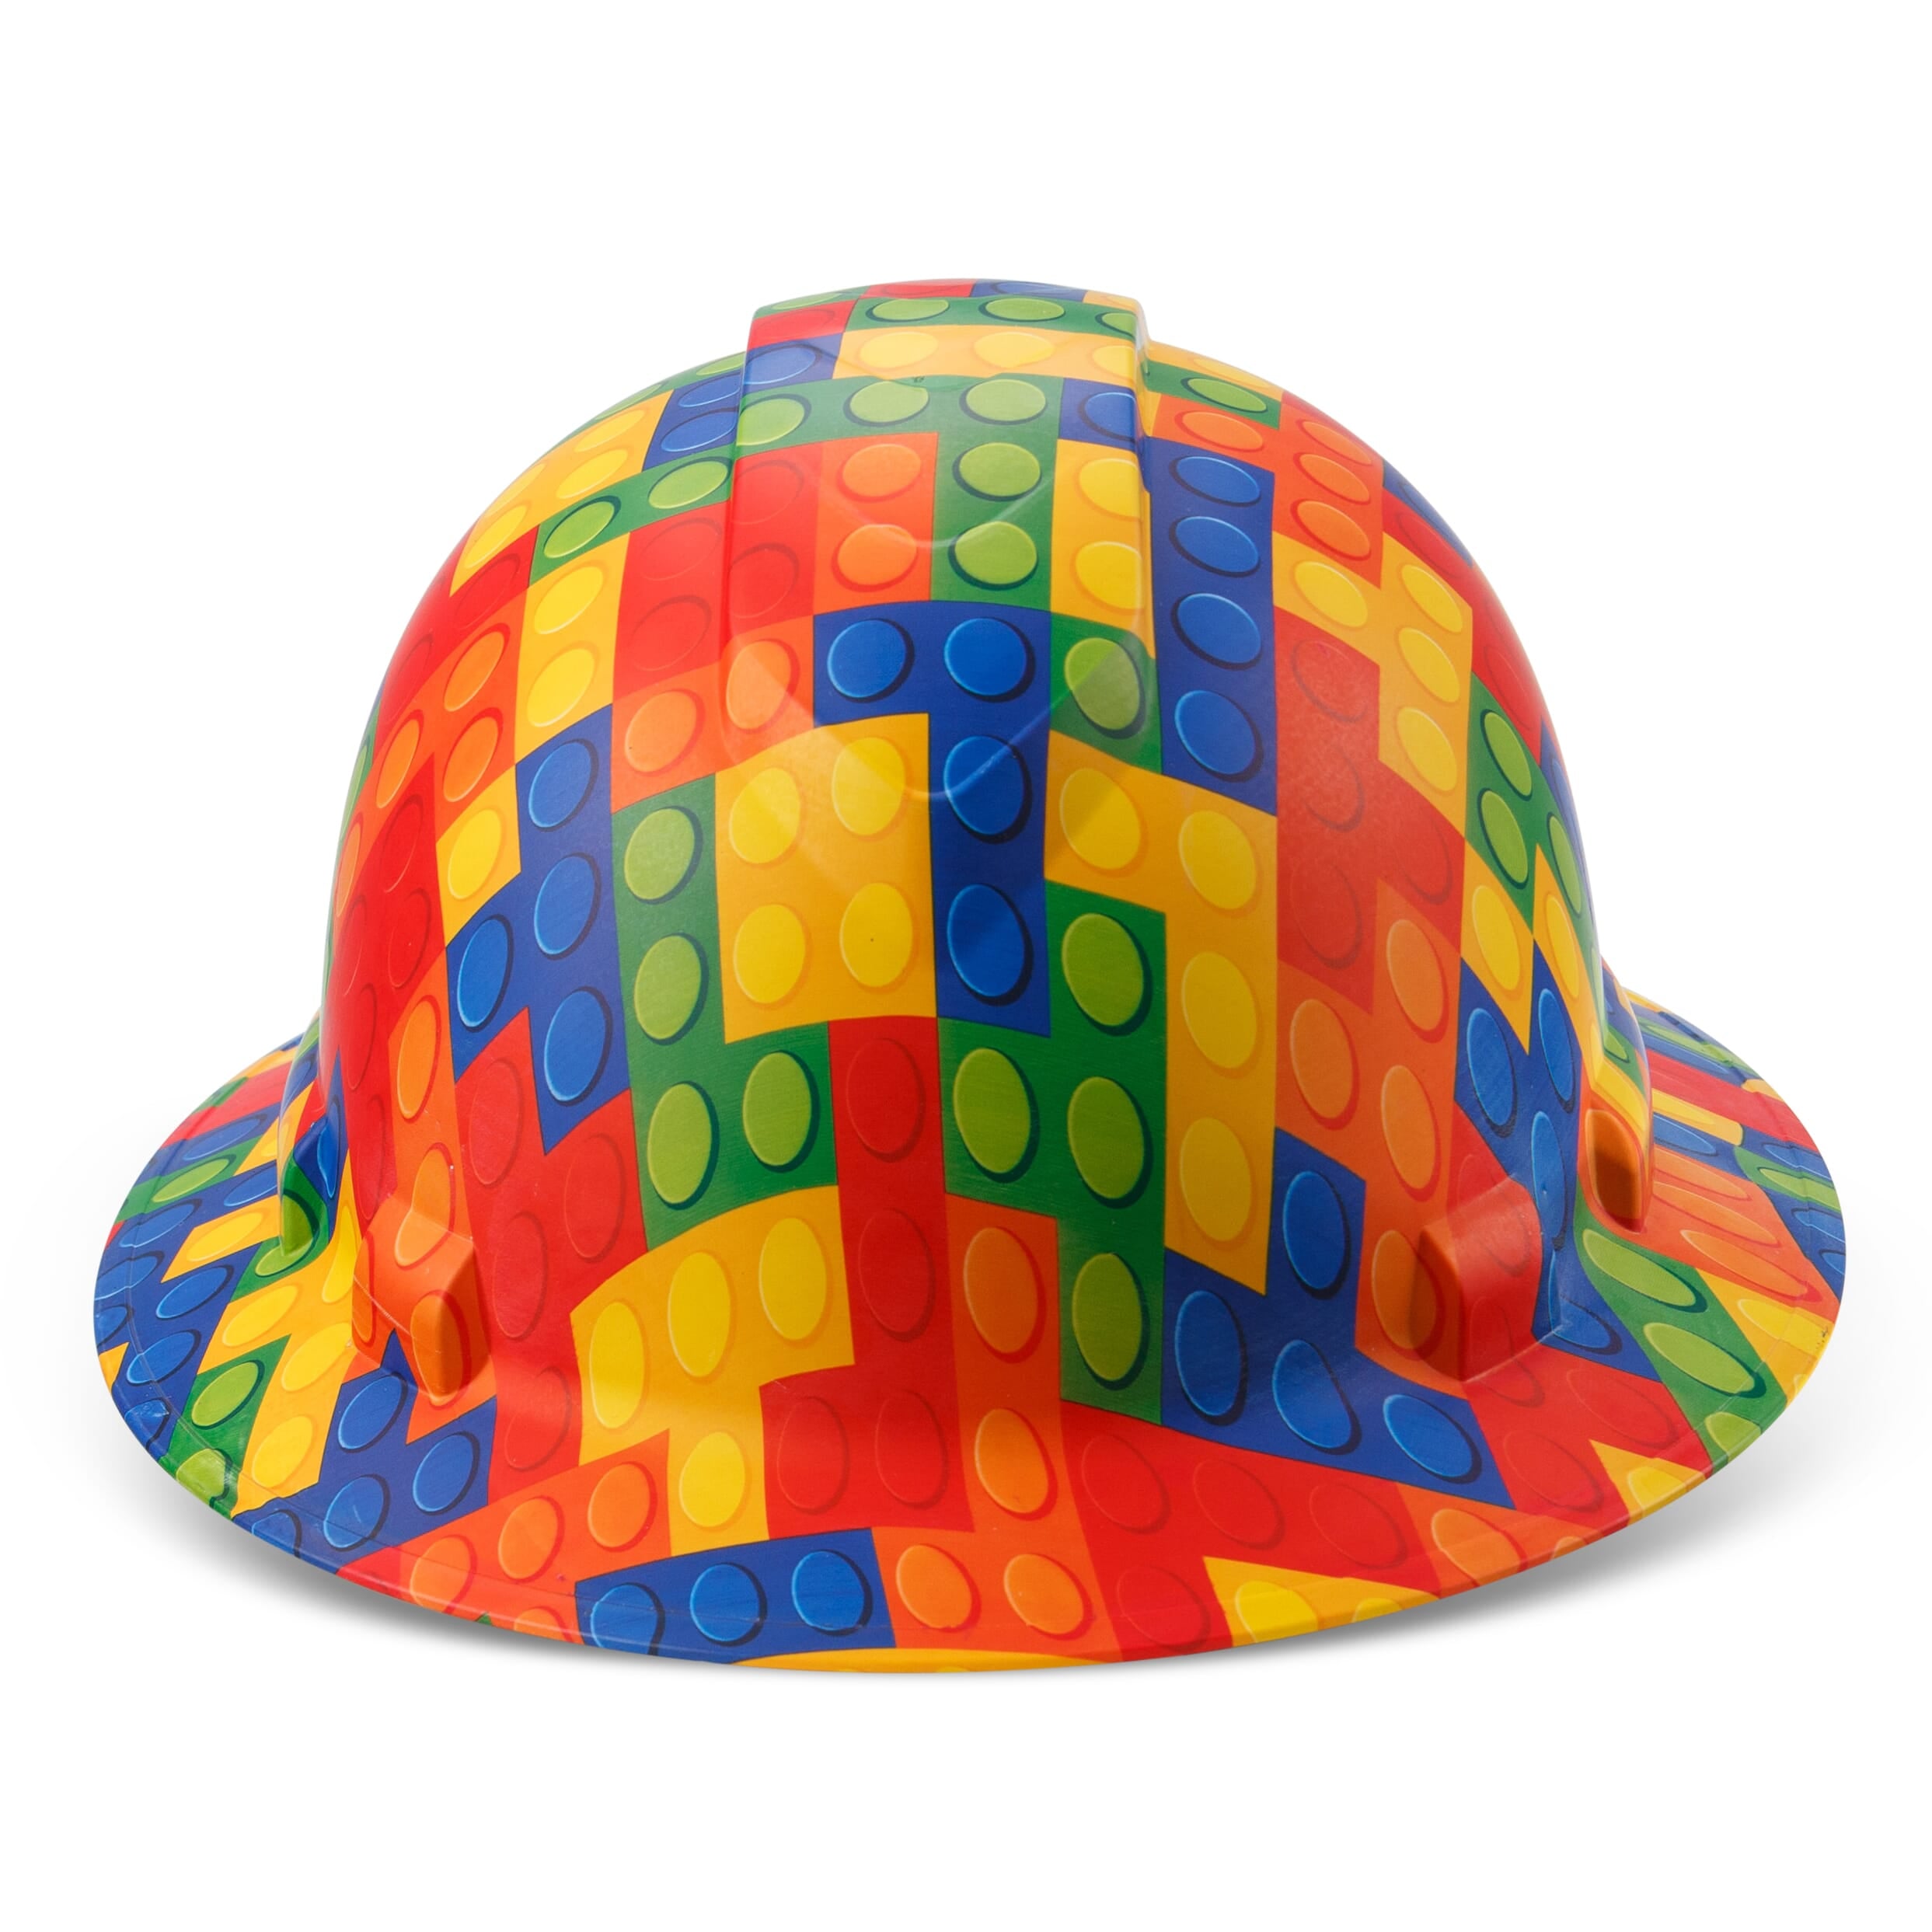 Full Brim Pyramex Hard Hat, Custom Lego Master Design, Safety Helmet, 6 Point